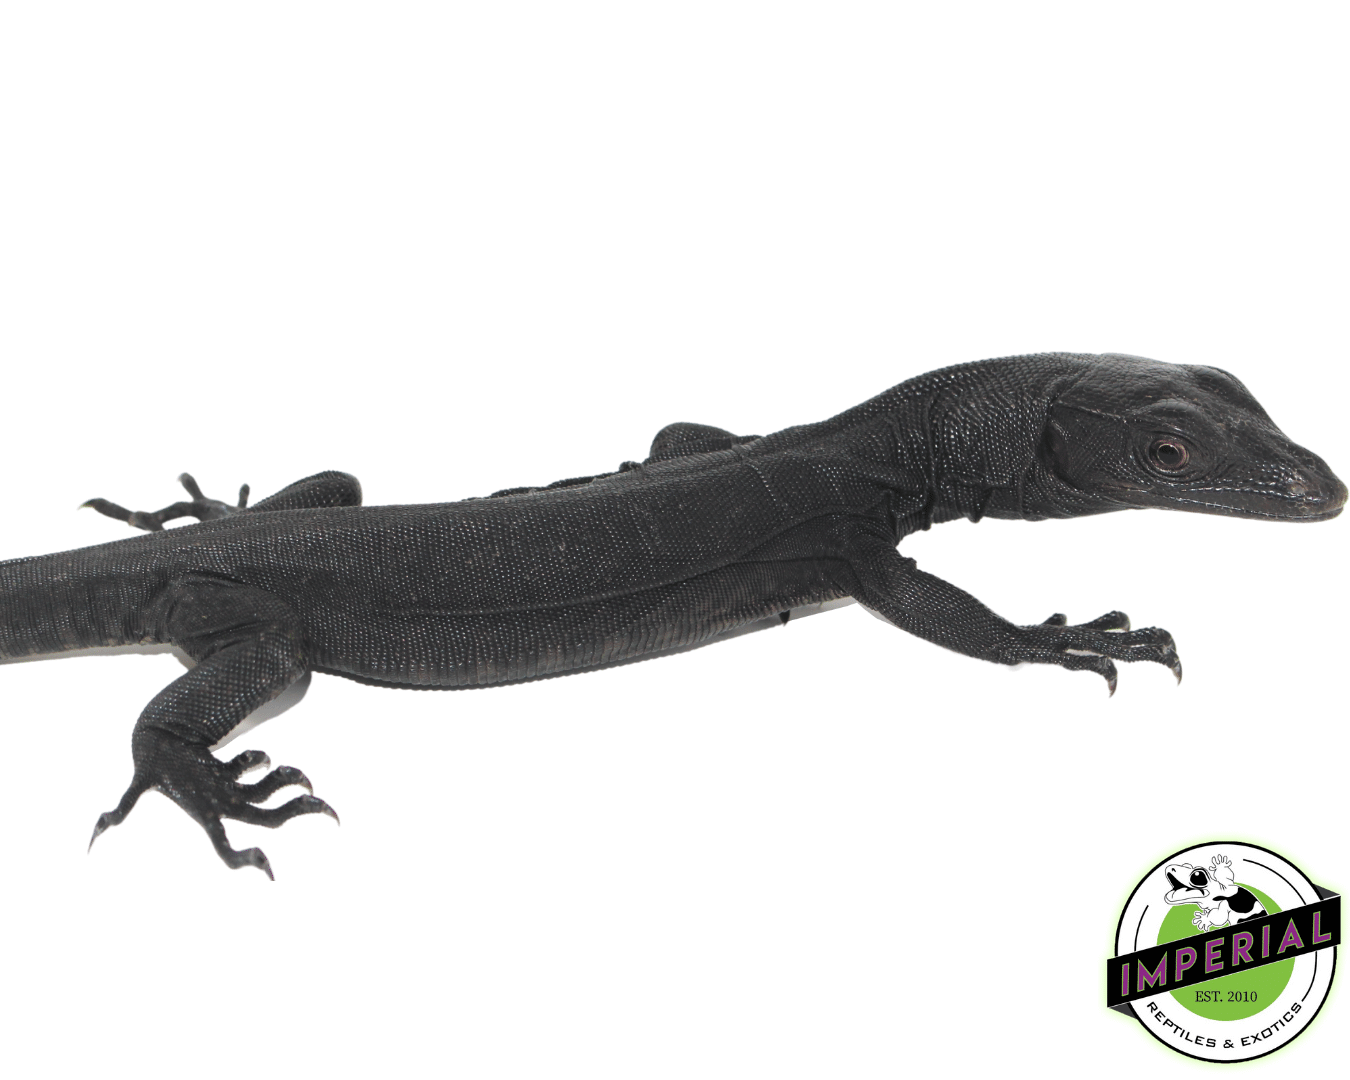 black dragon water monitor lizard for sale, buy reptiles online